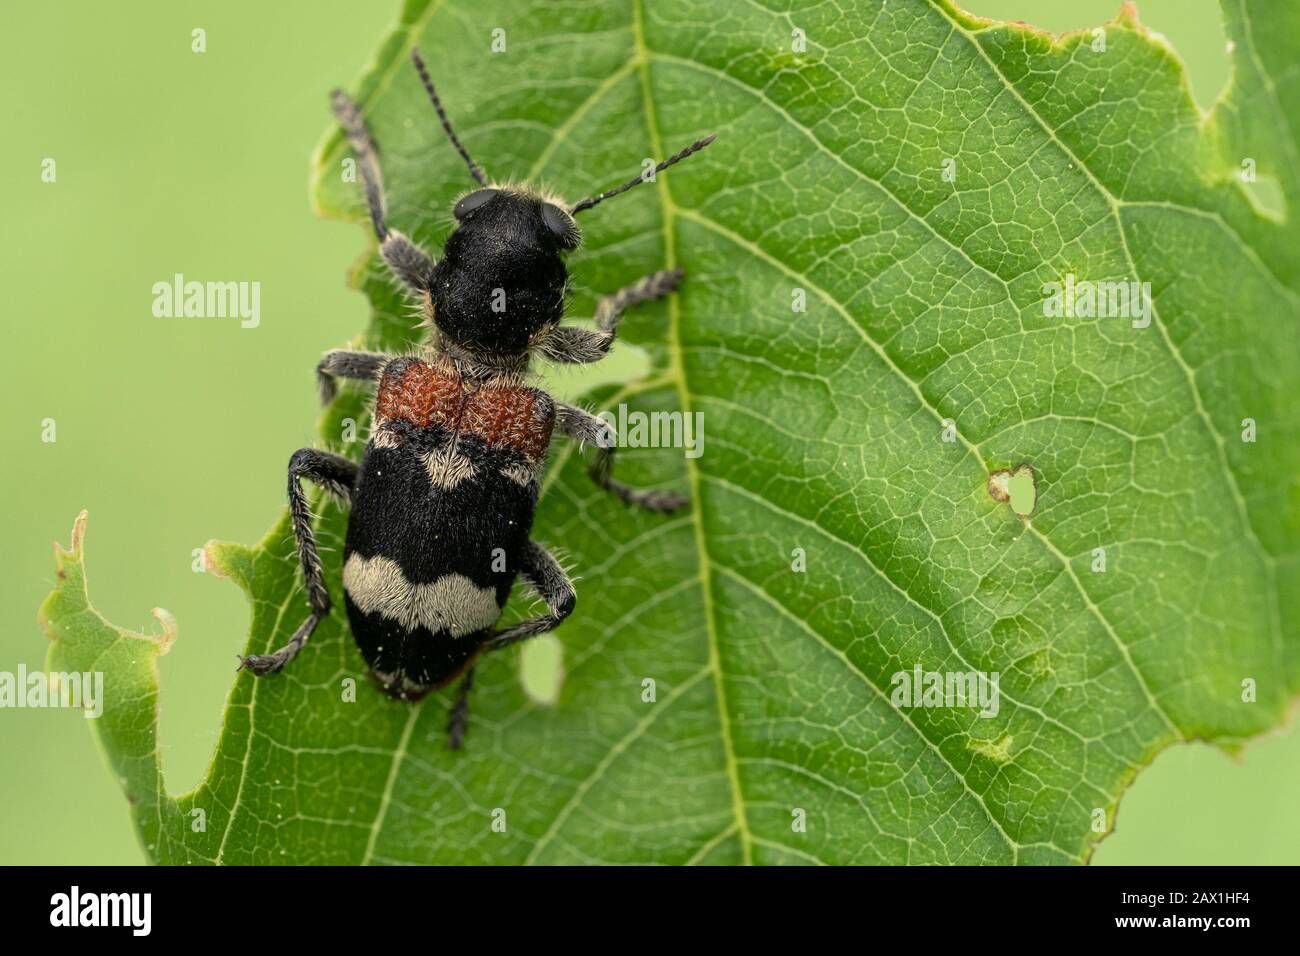 Beetle Clerus mutillarius sitting on a leaf in Czech Republic Stock Photo